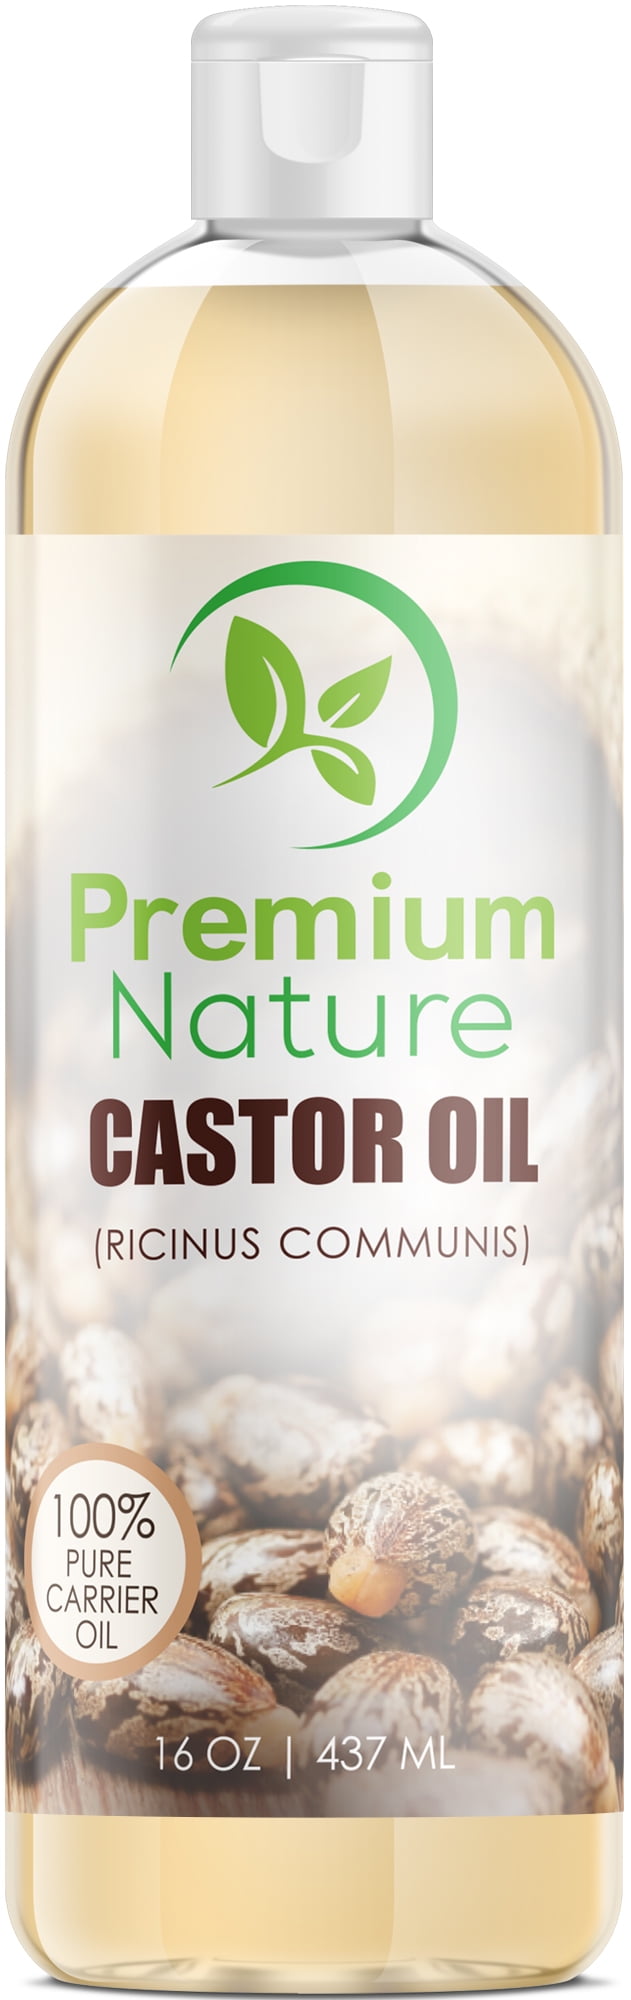 Castor Oil Pure Carrier Oil 16 oz - Cold Pressed Castrol Oil for ...